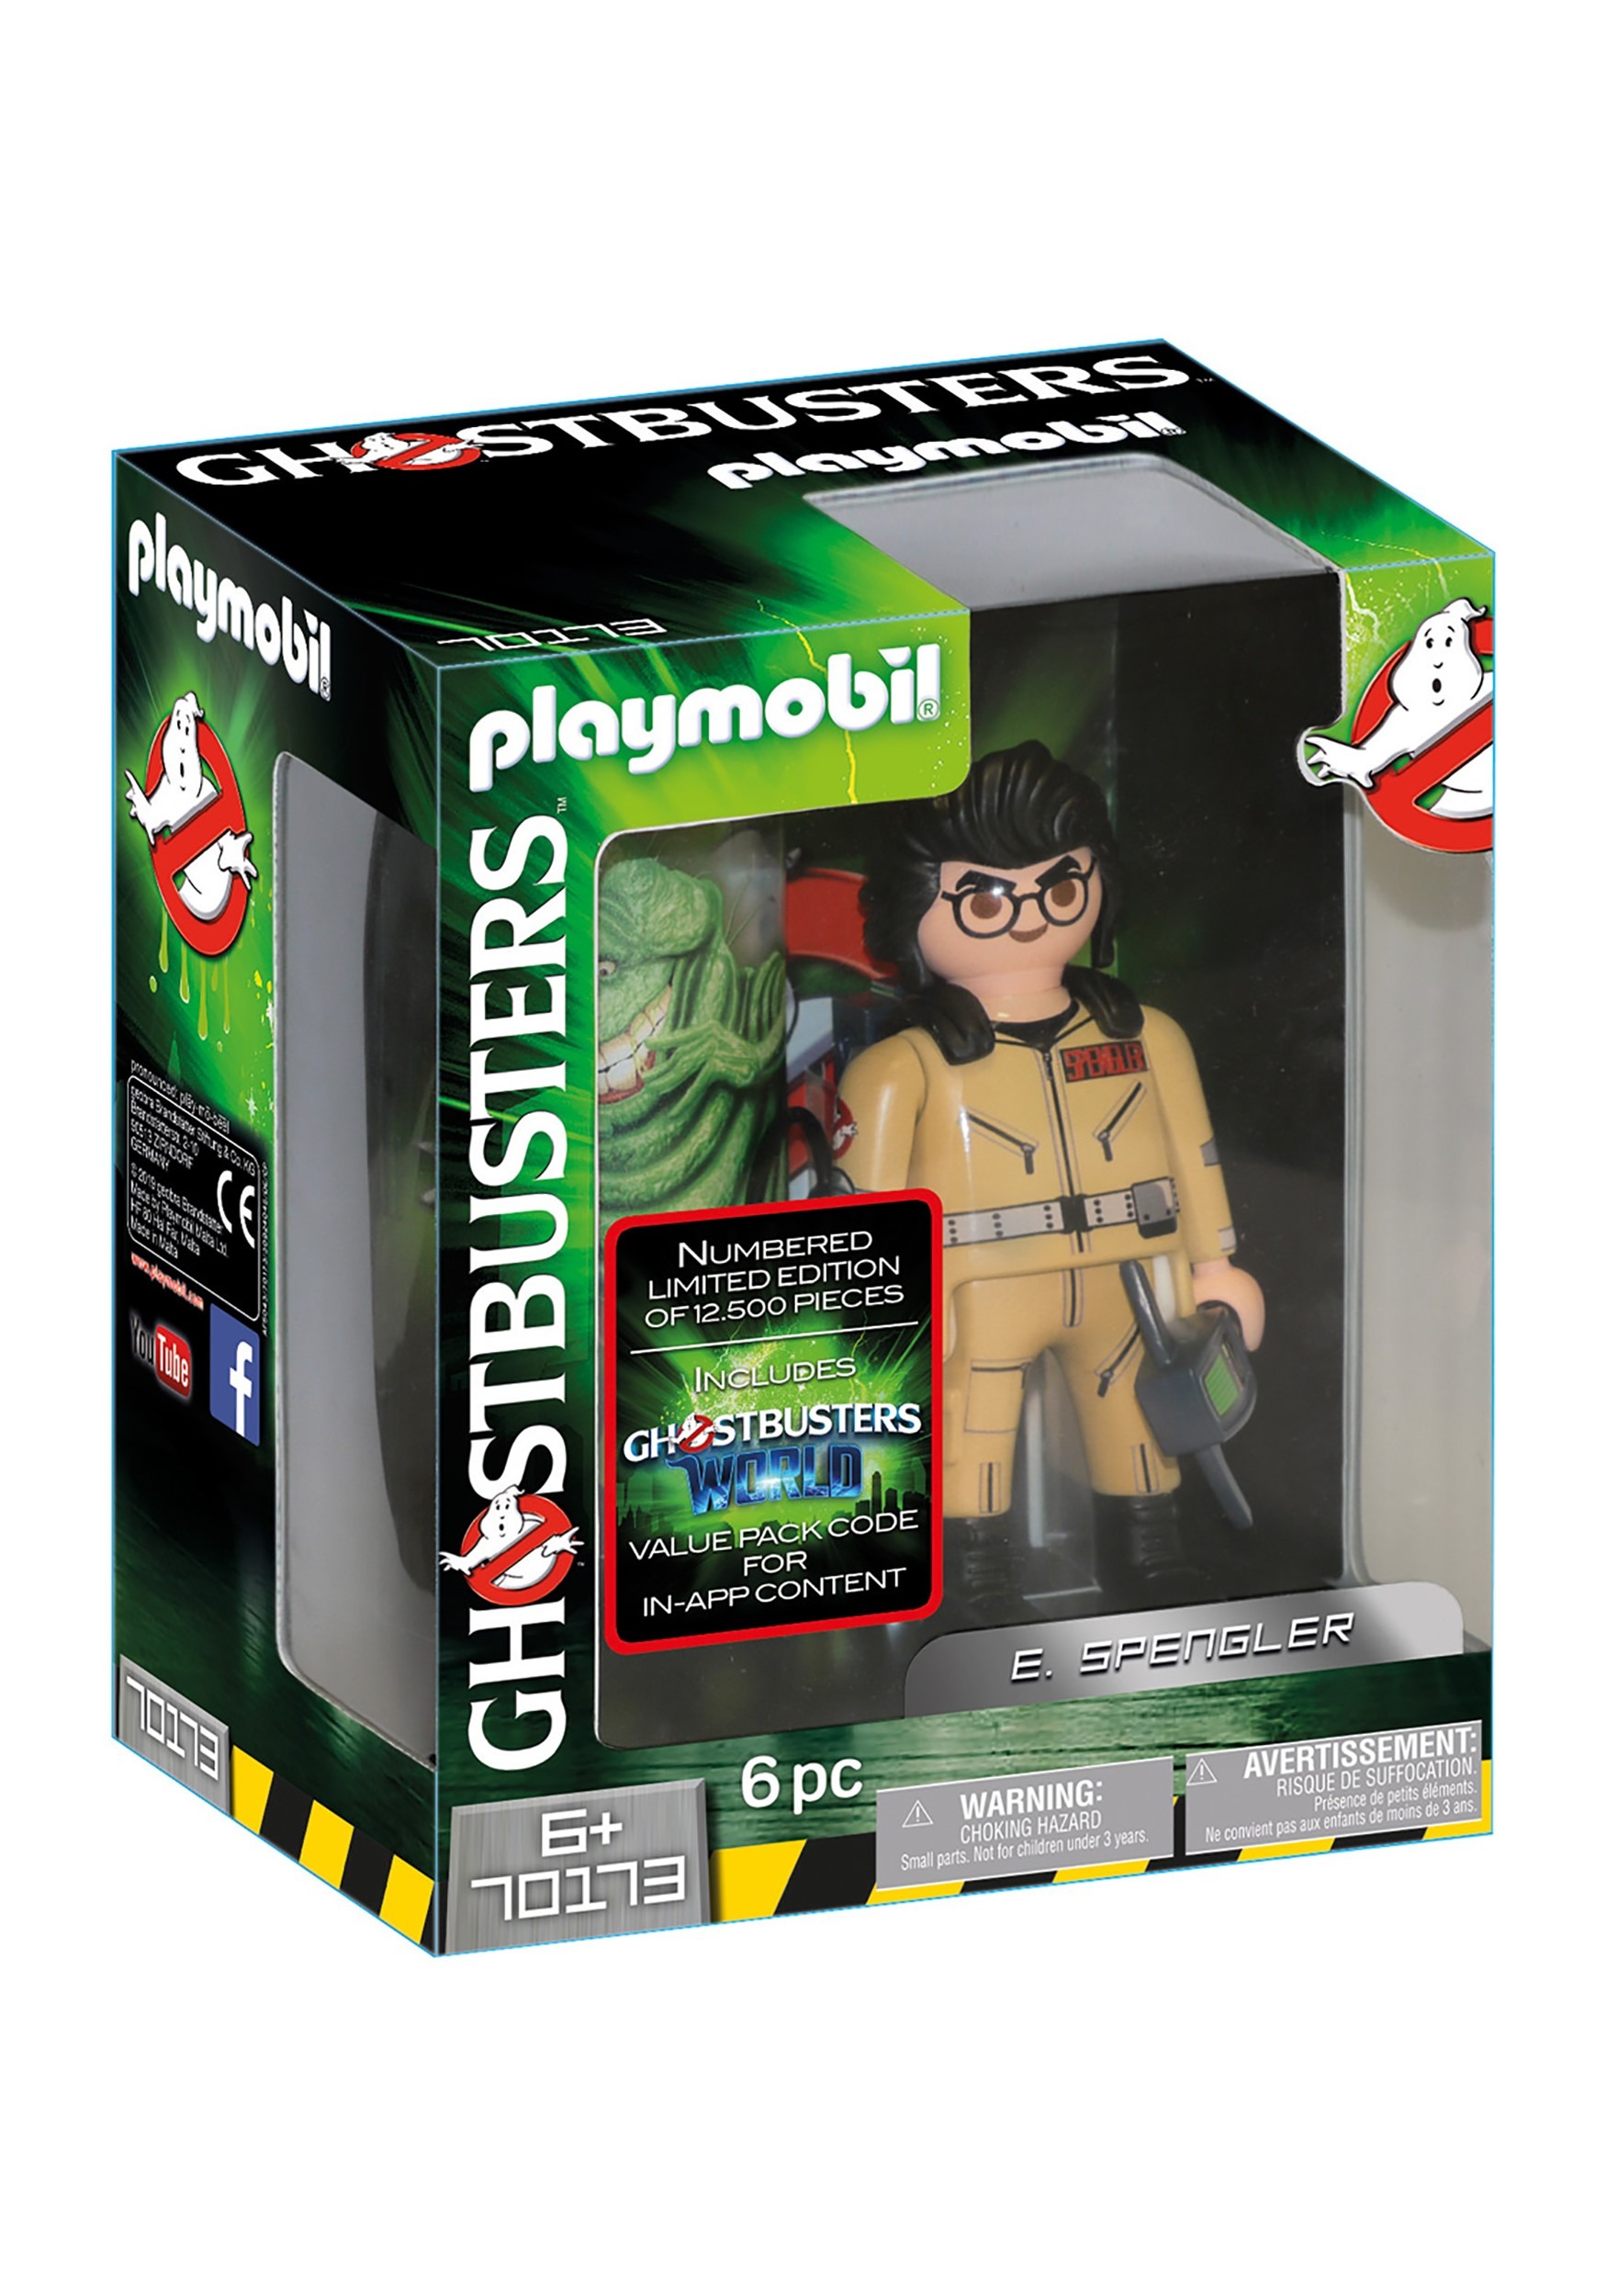 Playmobil Ghostbusters Collectors Edition E. Spengler Figure